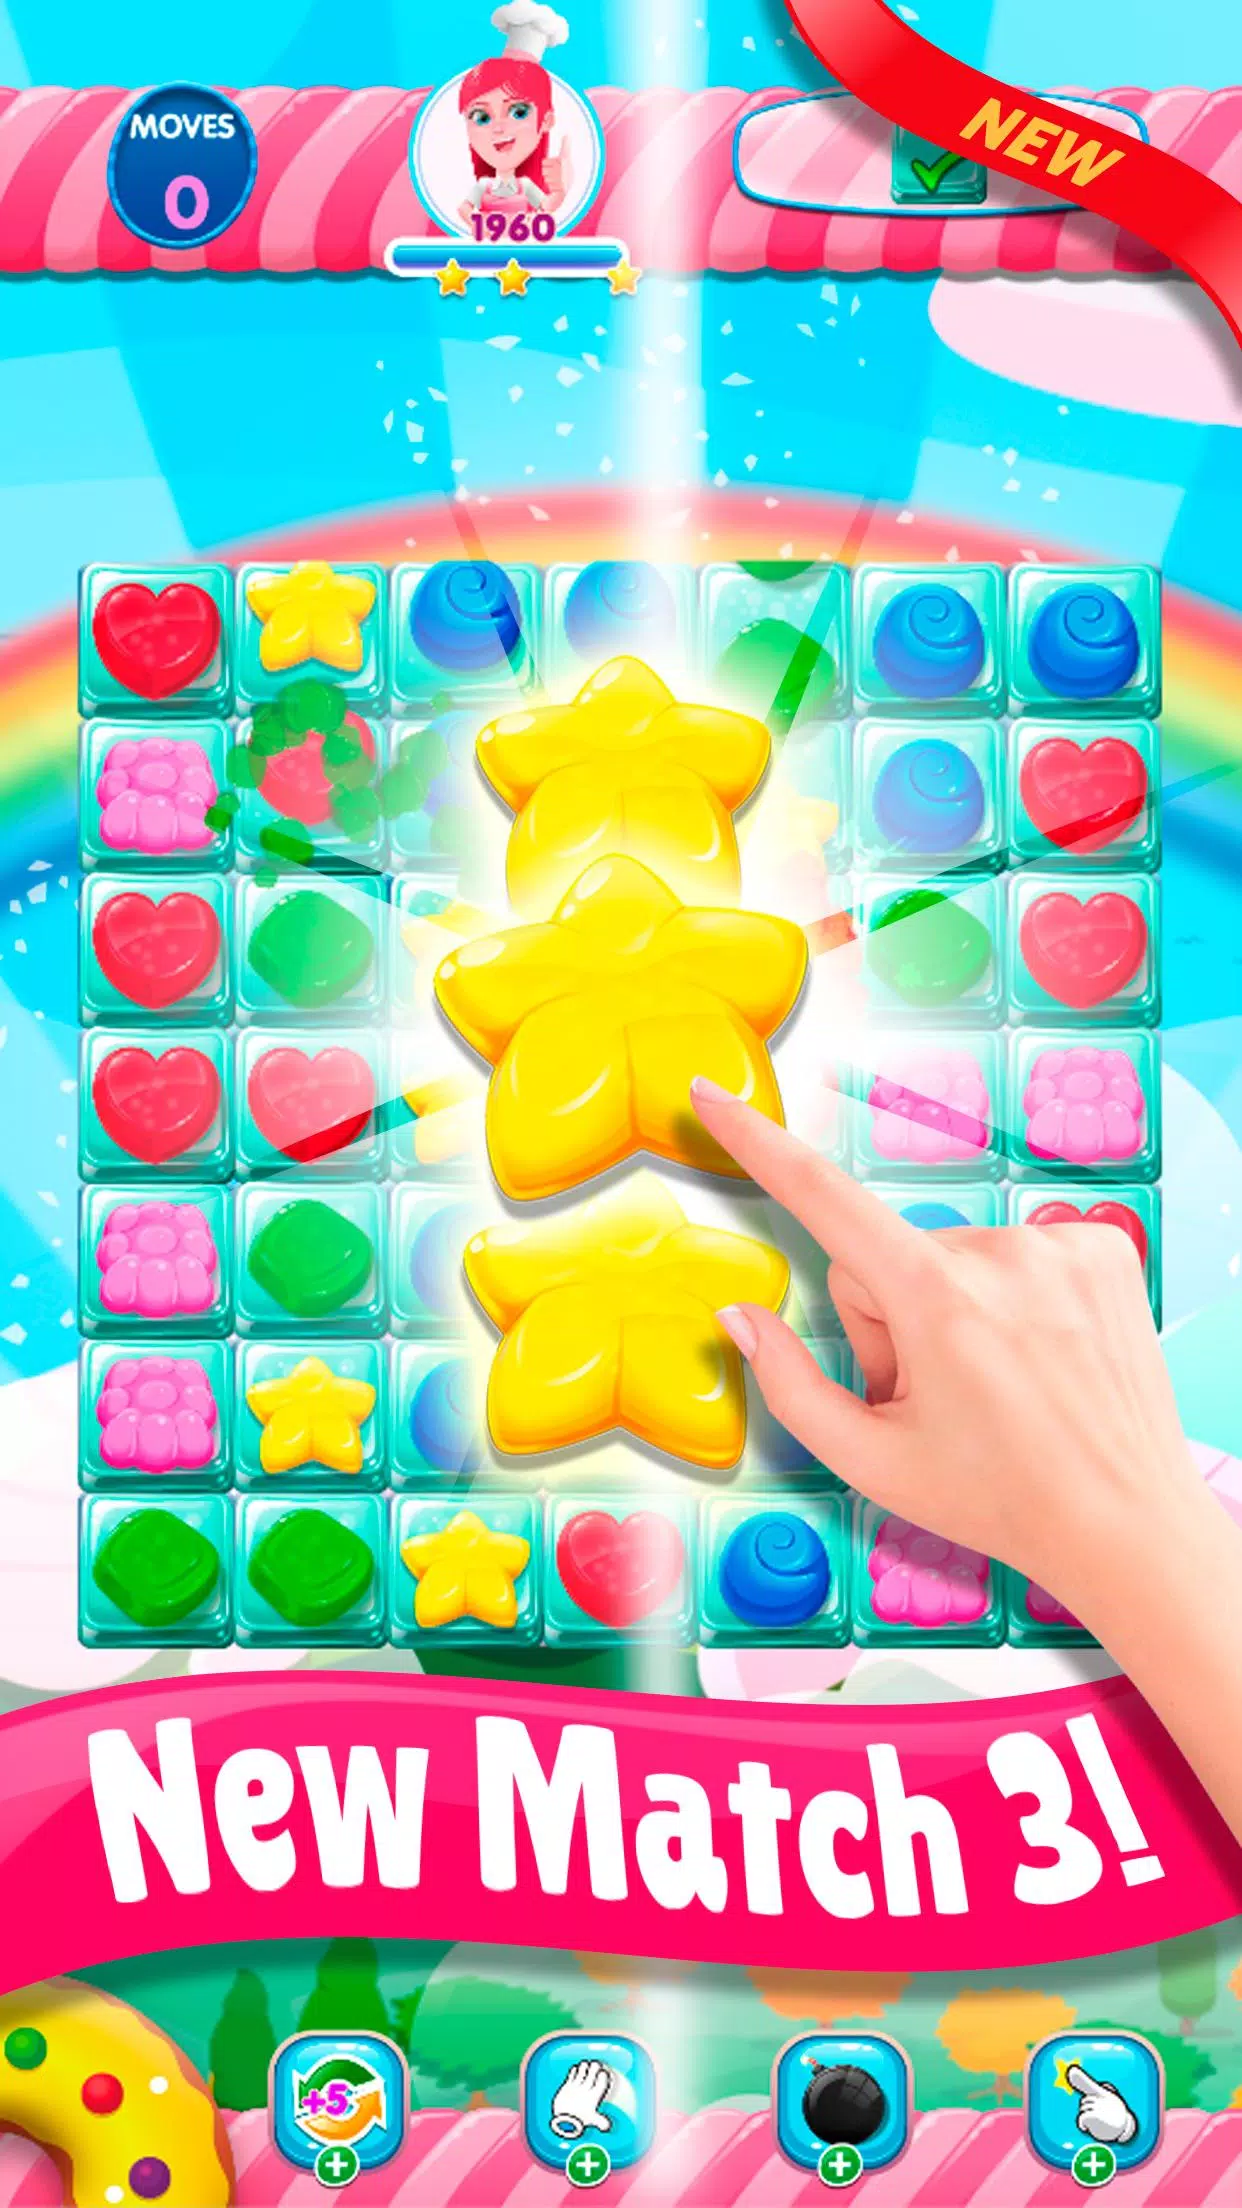 More sugary sweet fun with the new Candy Crush Soda Saga game